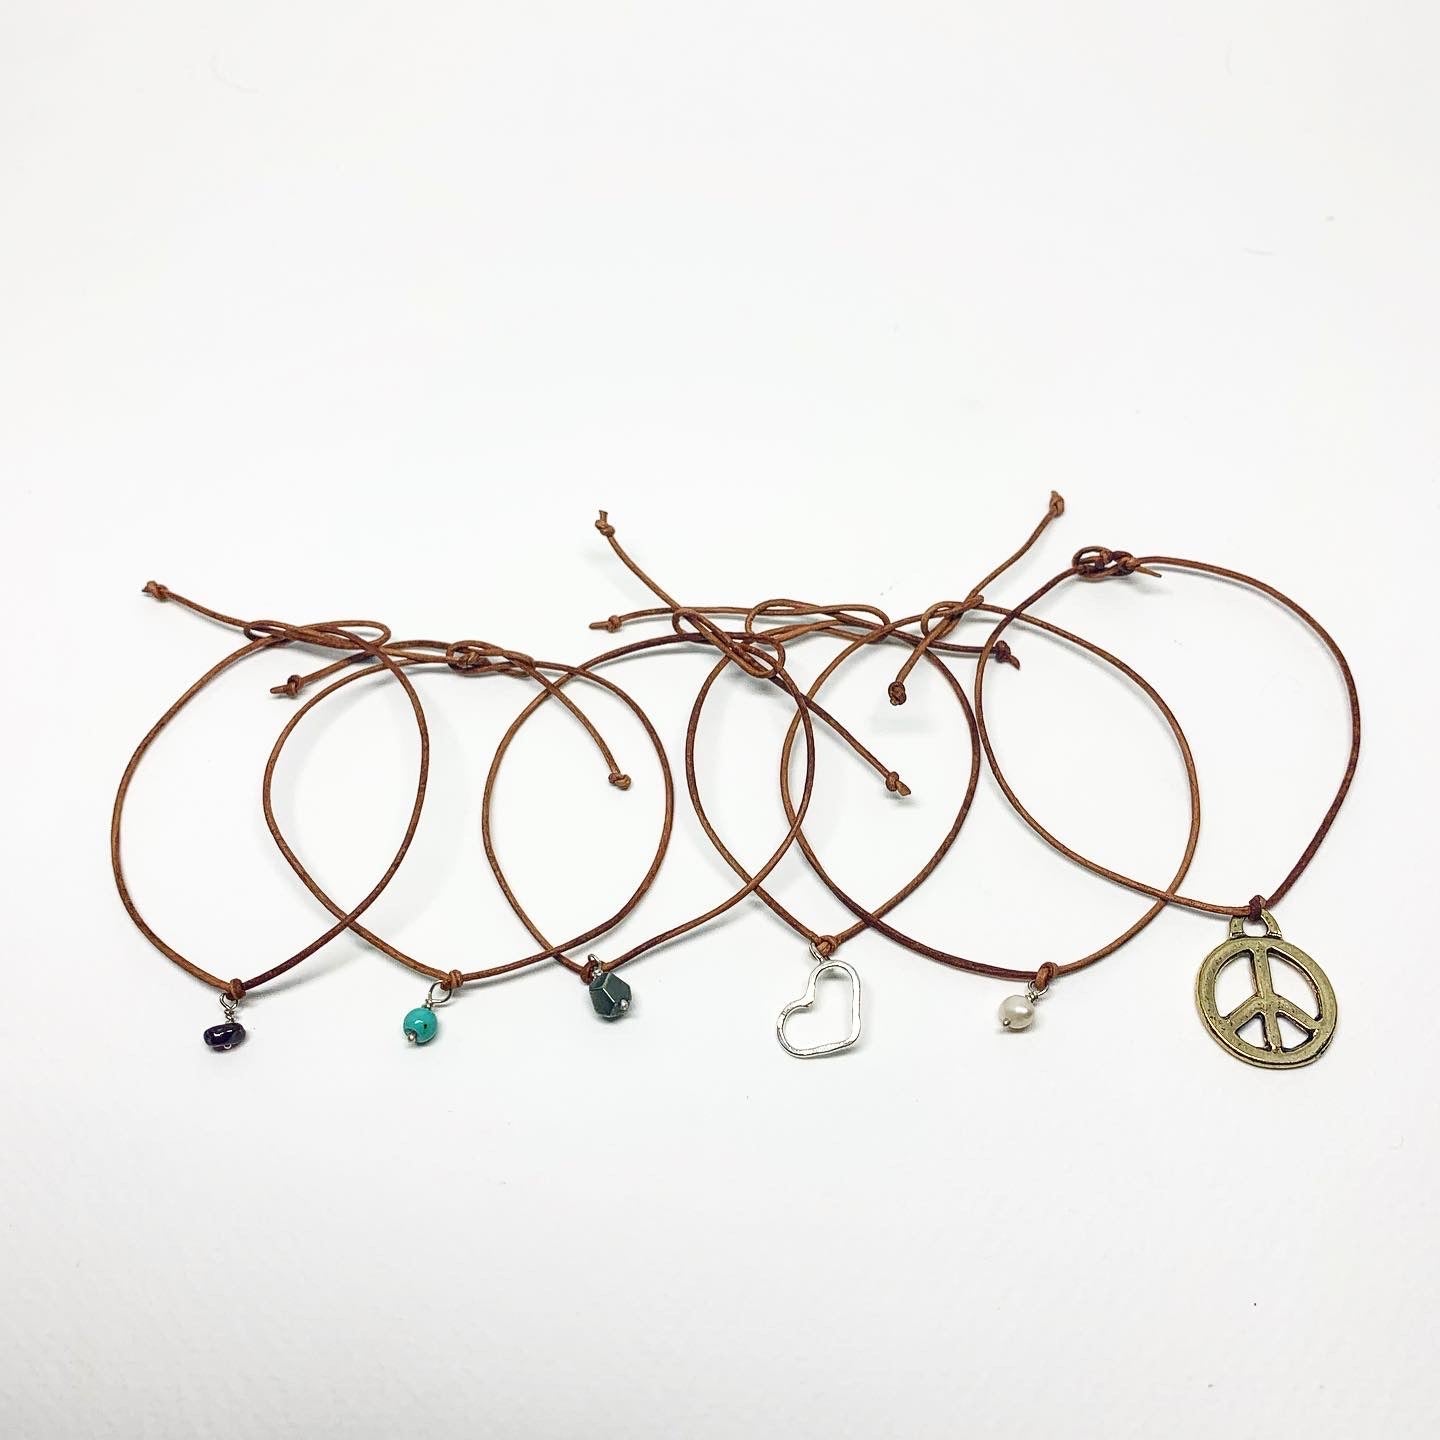 Pyrite Charm Bracelet - Handmade Leather Wish Bracelet for Protection and Joy - Jewelry & Watches - Bijou Her -  -  - 